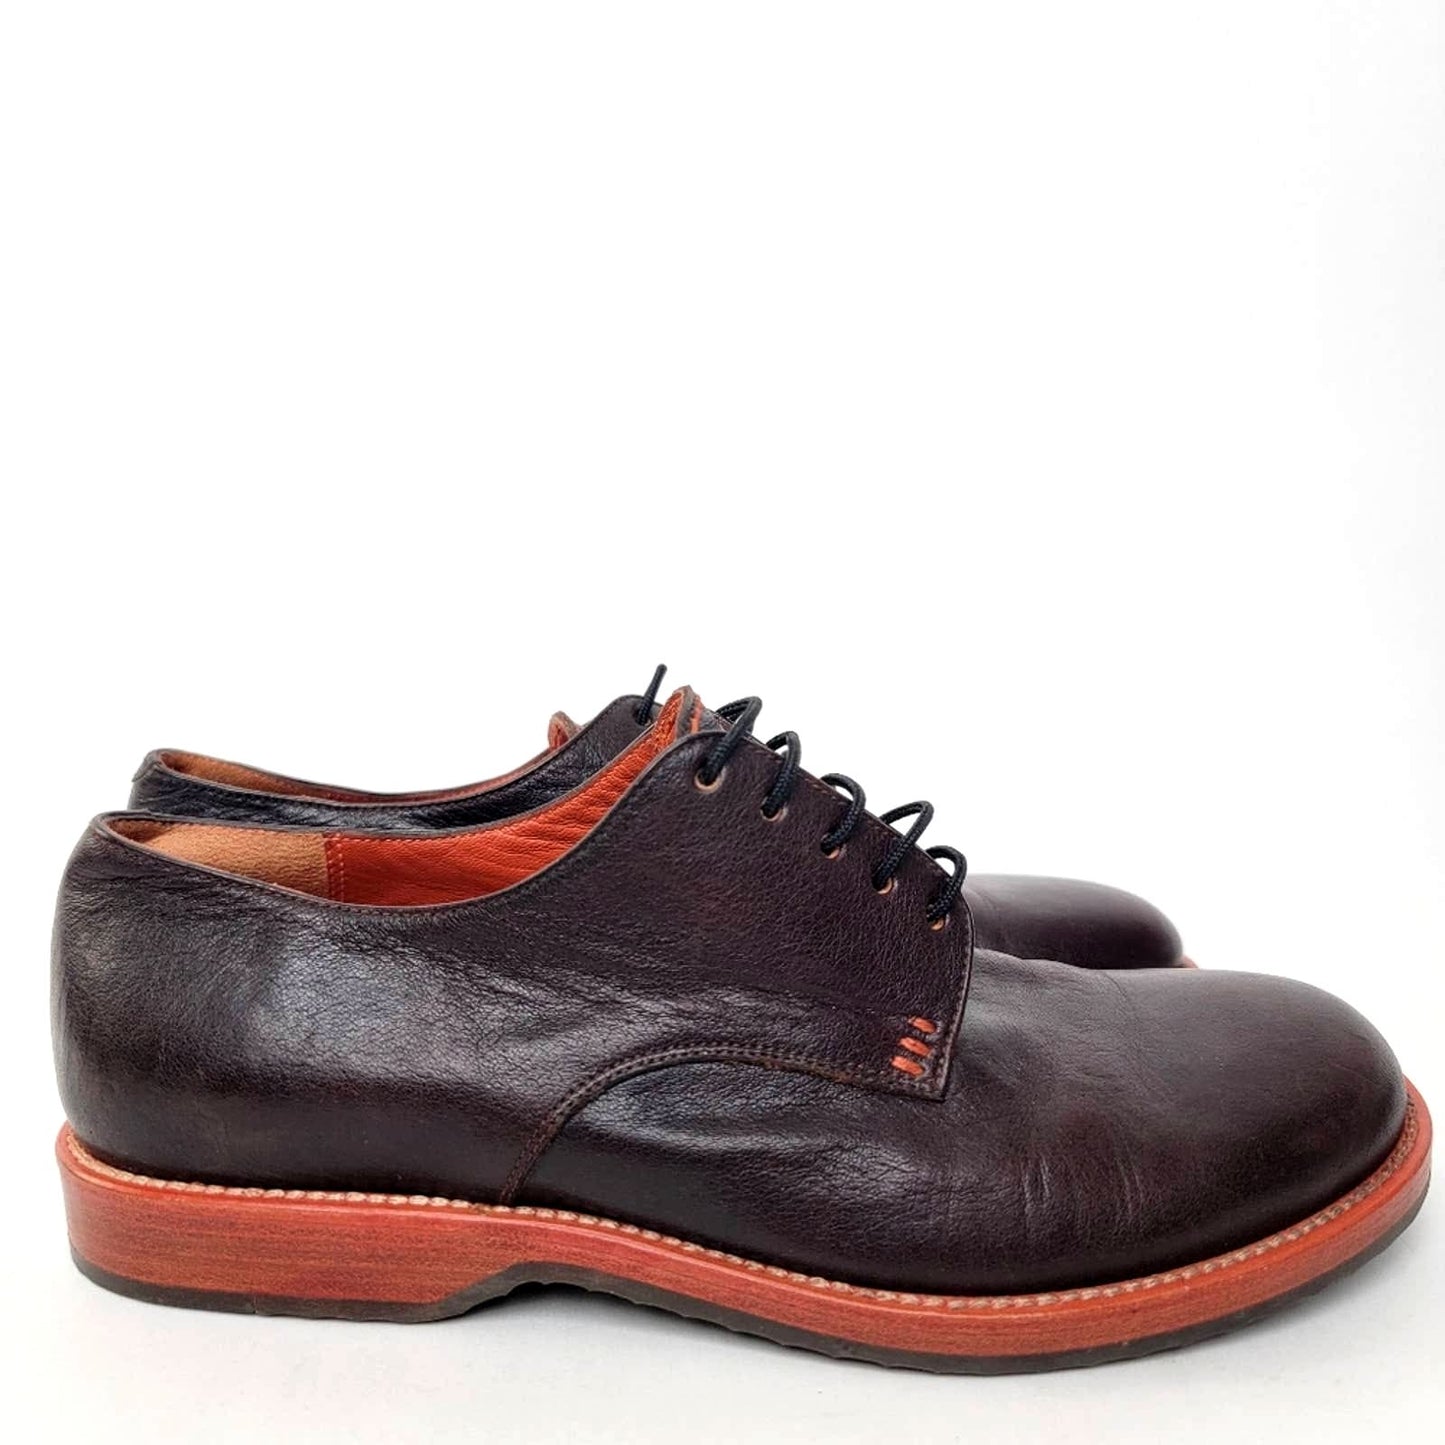 Barneys New York x Henry Cuir Italian Designer Oxford Shoes - 6